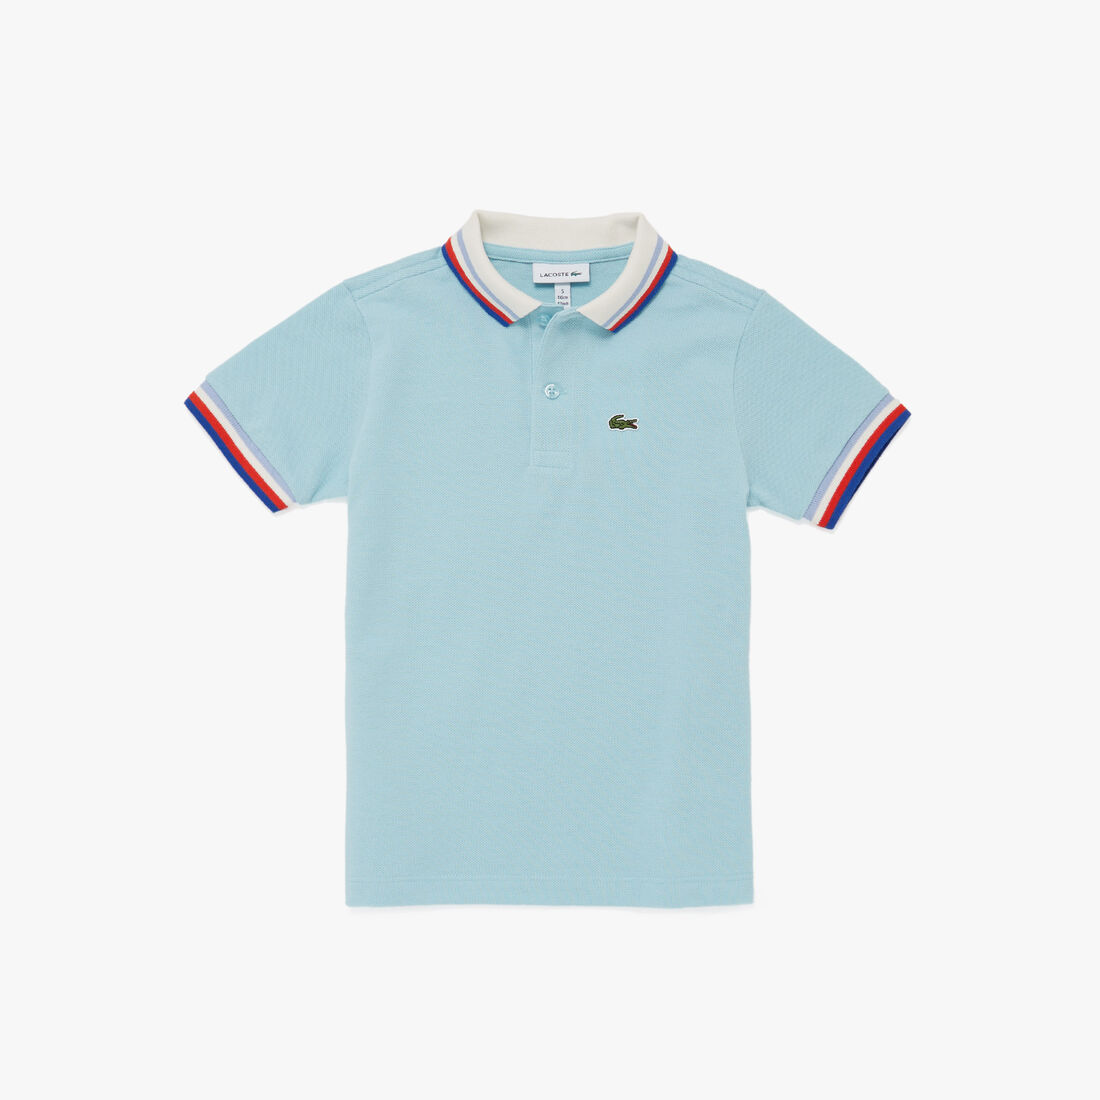 Boy’s Lacoste Heritage Cotton Polo Shirt